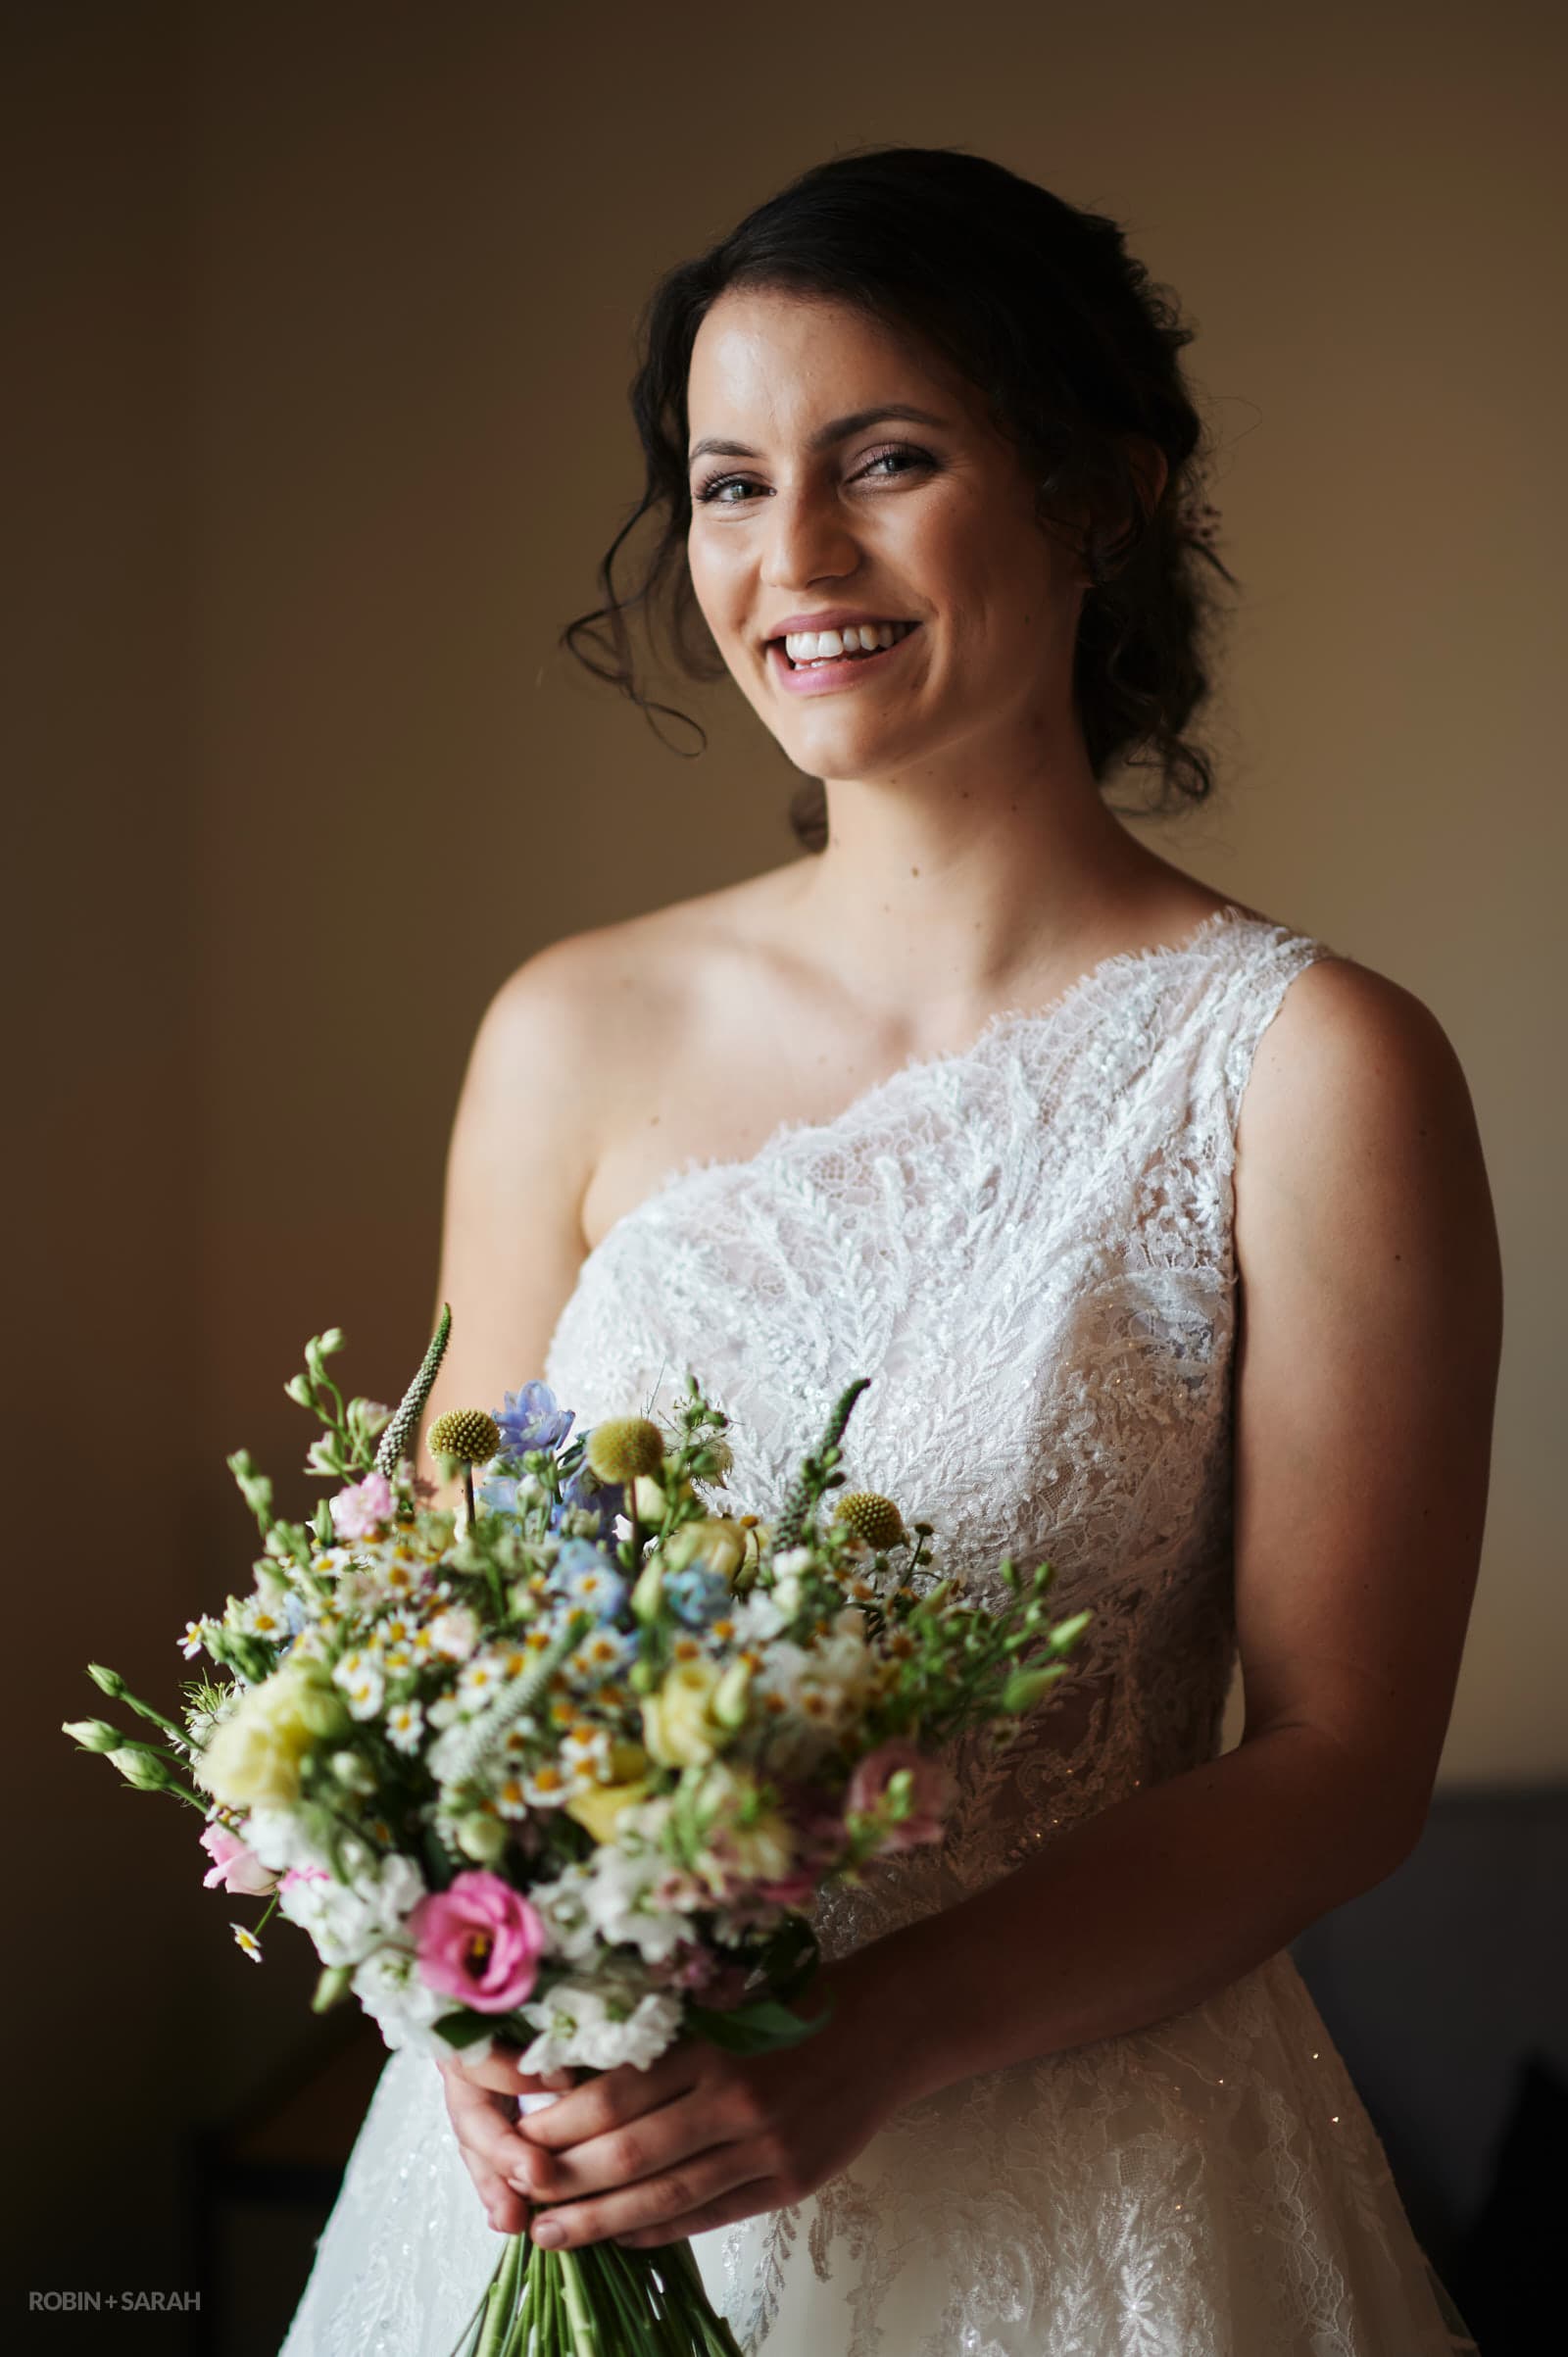 Portrait of beautiful bride holding bouquet of flowers